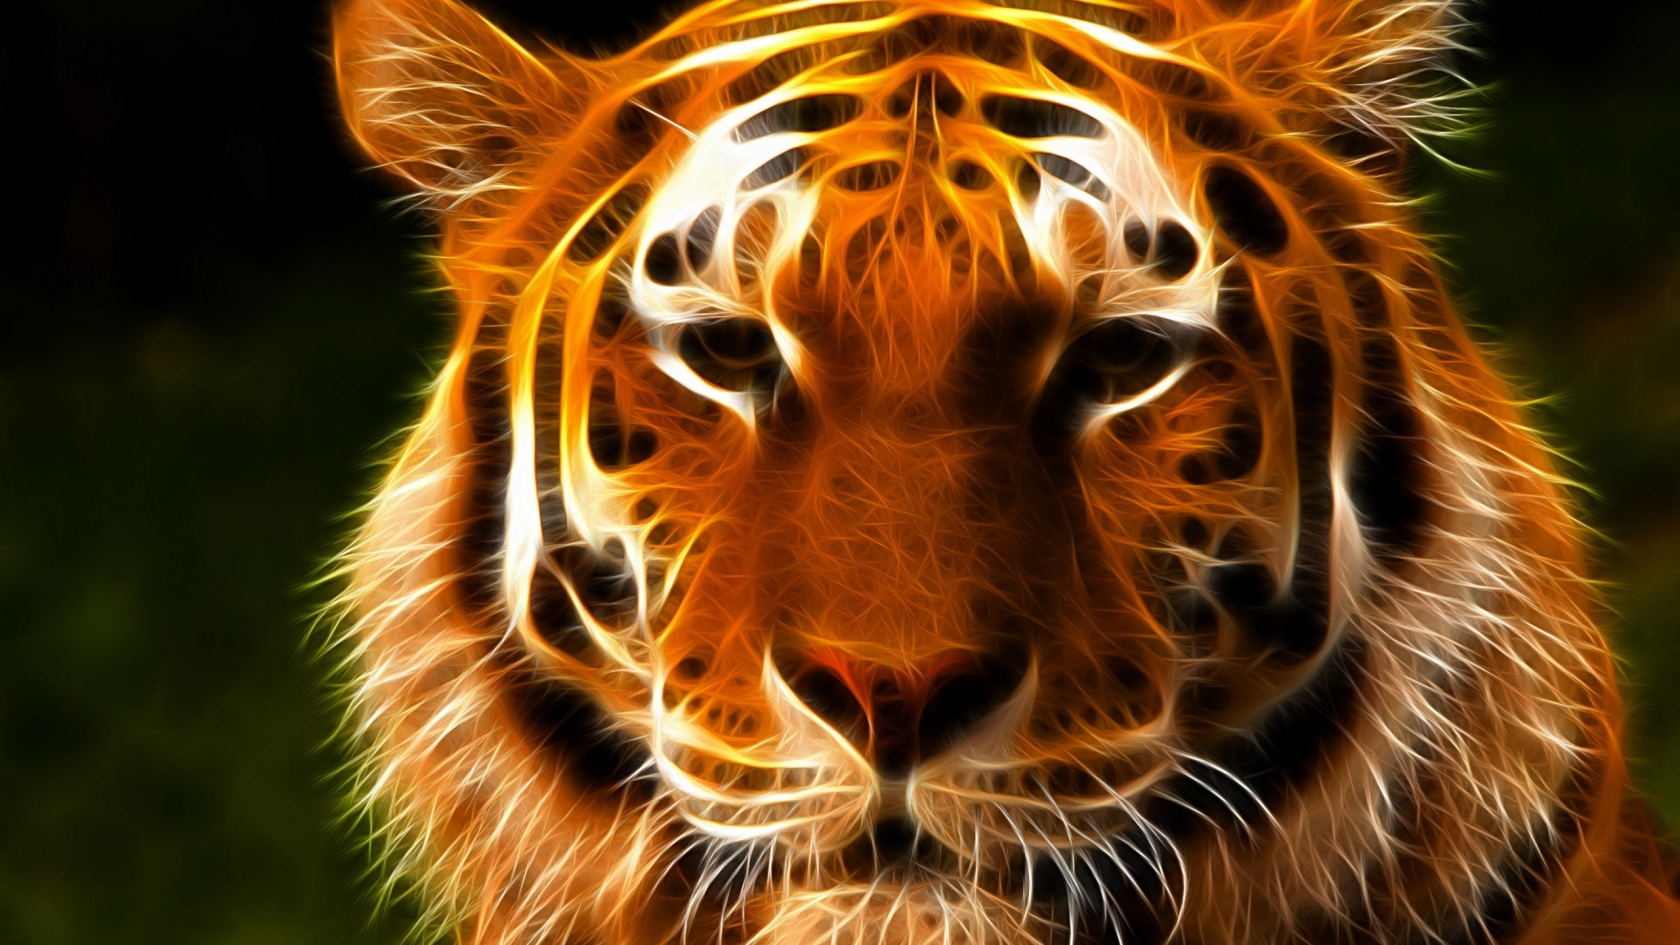 Tiger Face Art for 1680 x 945 HDTV resolution